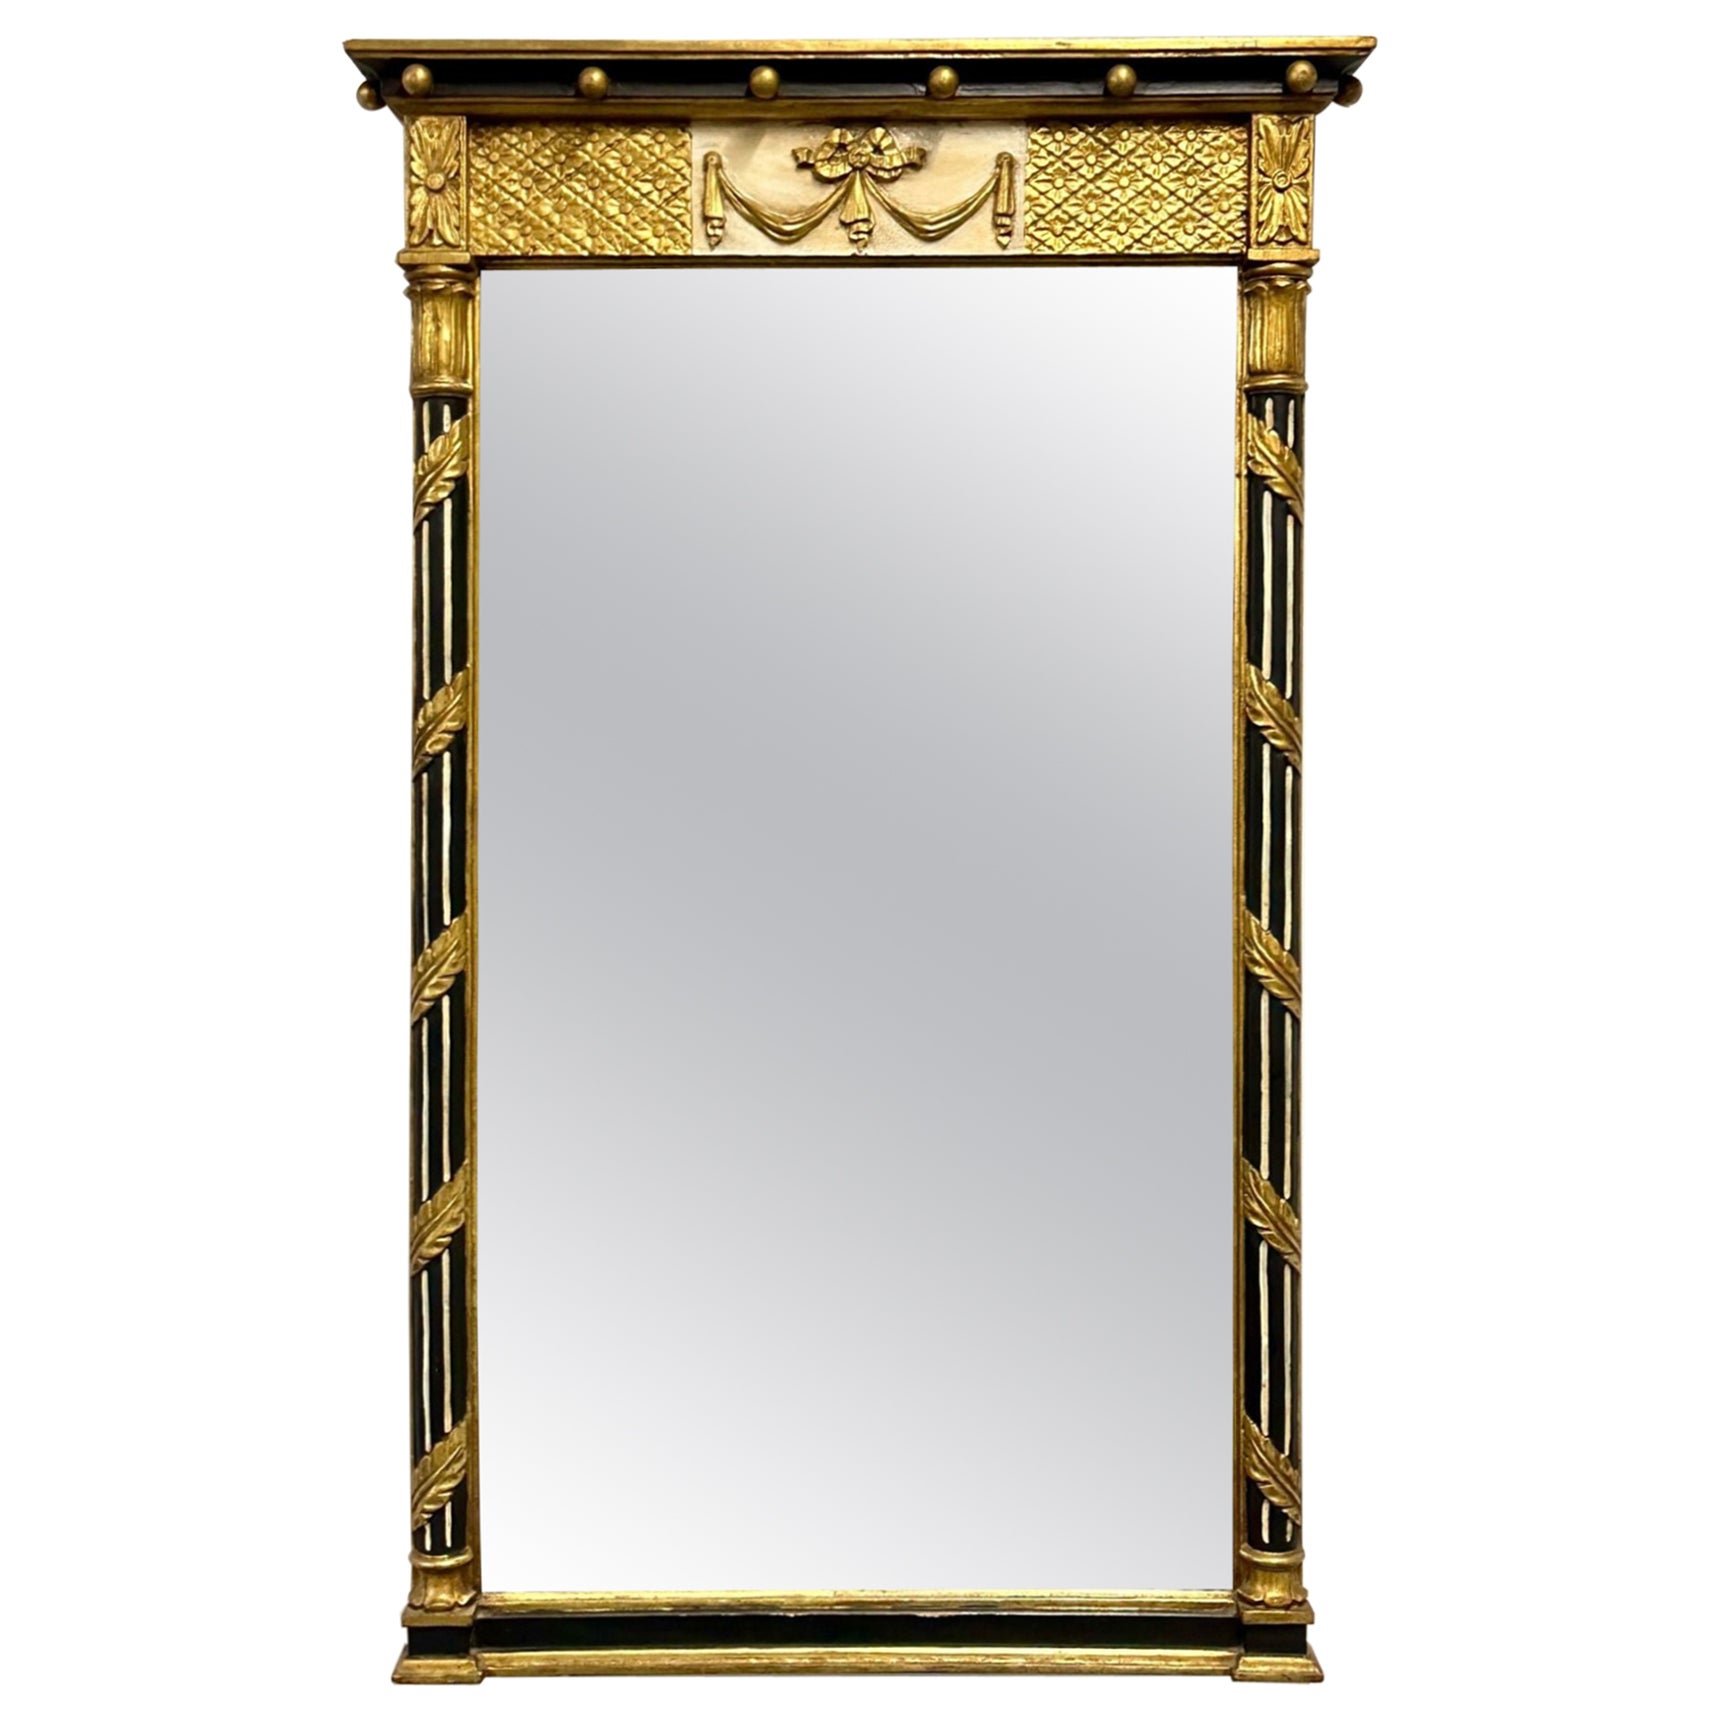 Miroir mural / miroir console en bois dor de style Hollywood Regency, fabriqu en Italie